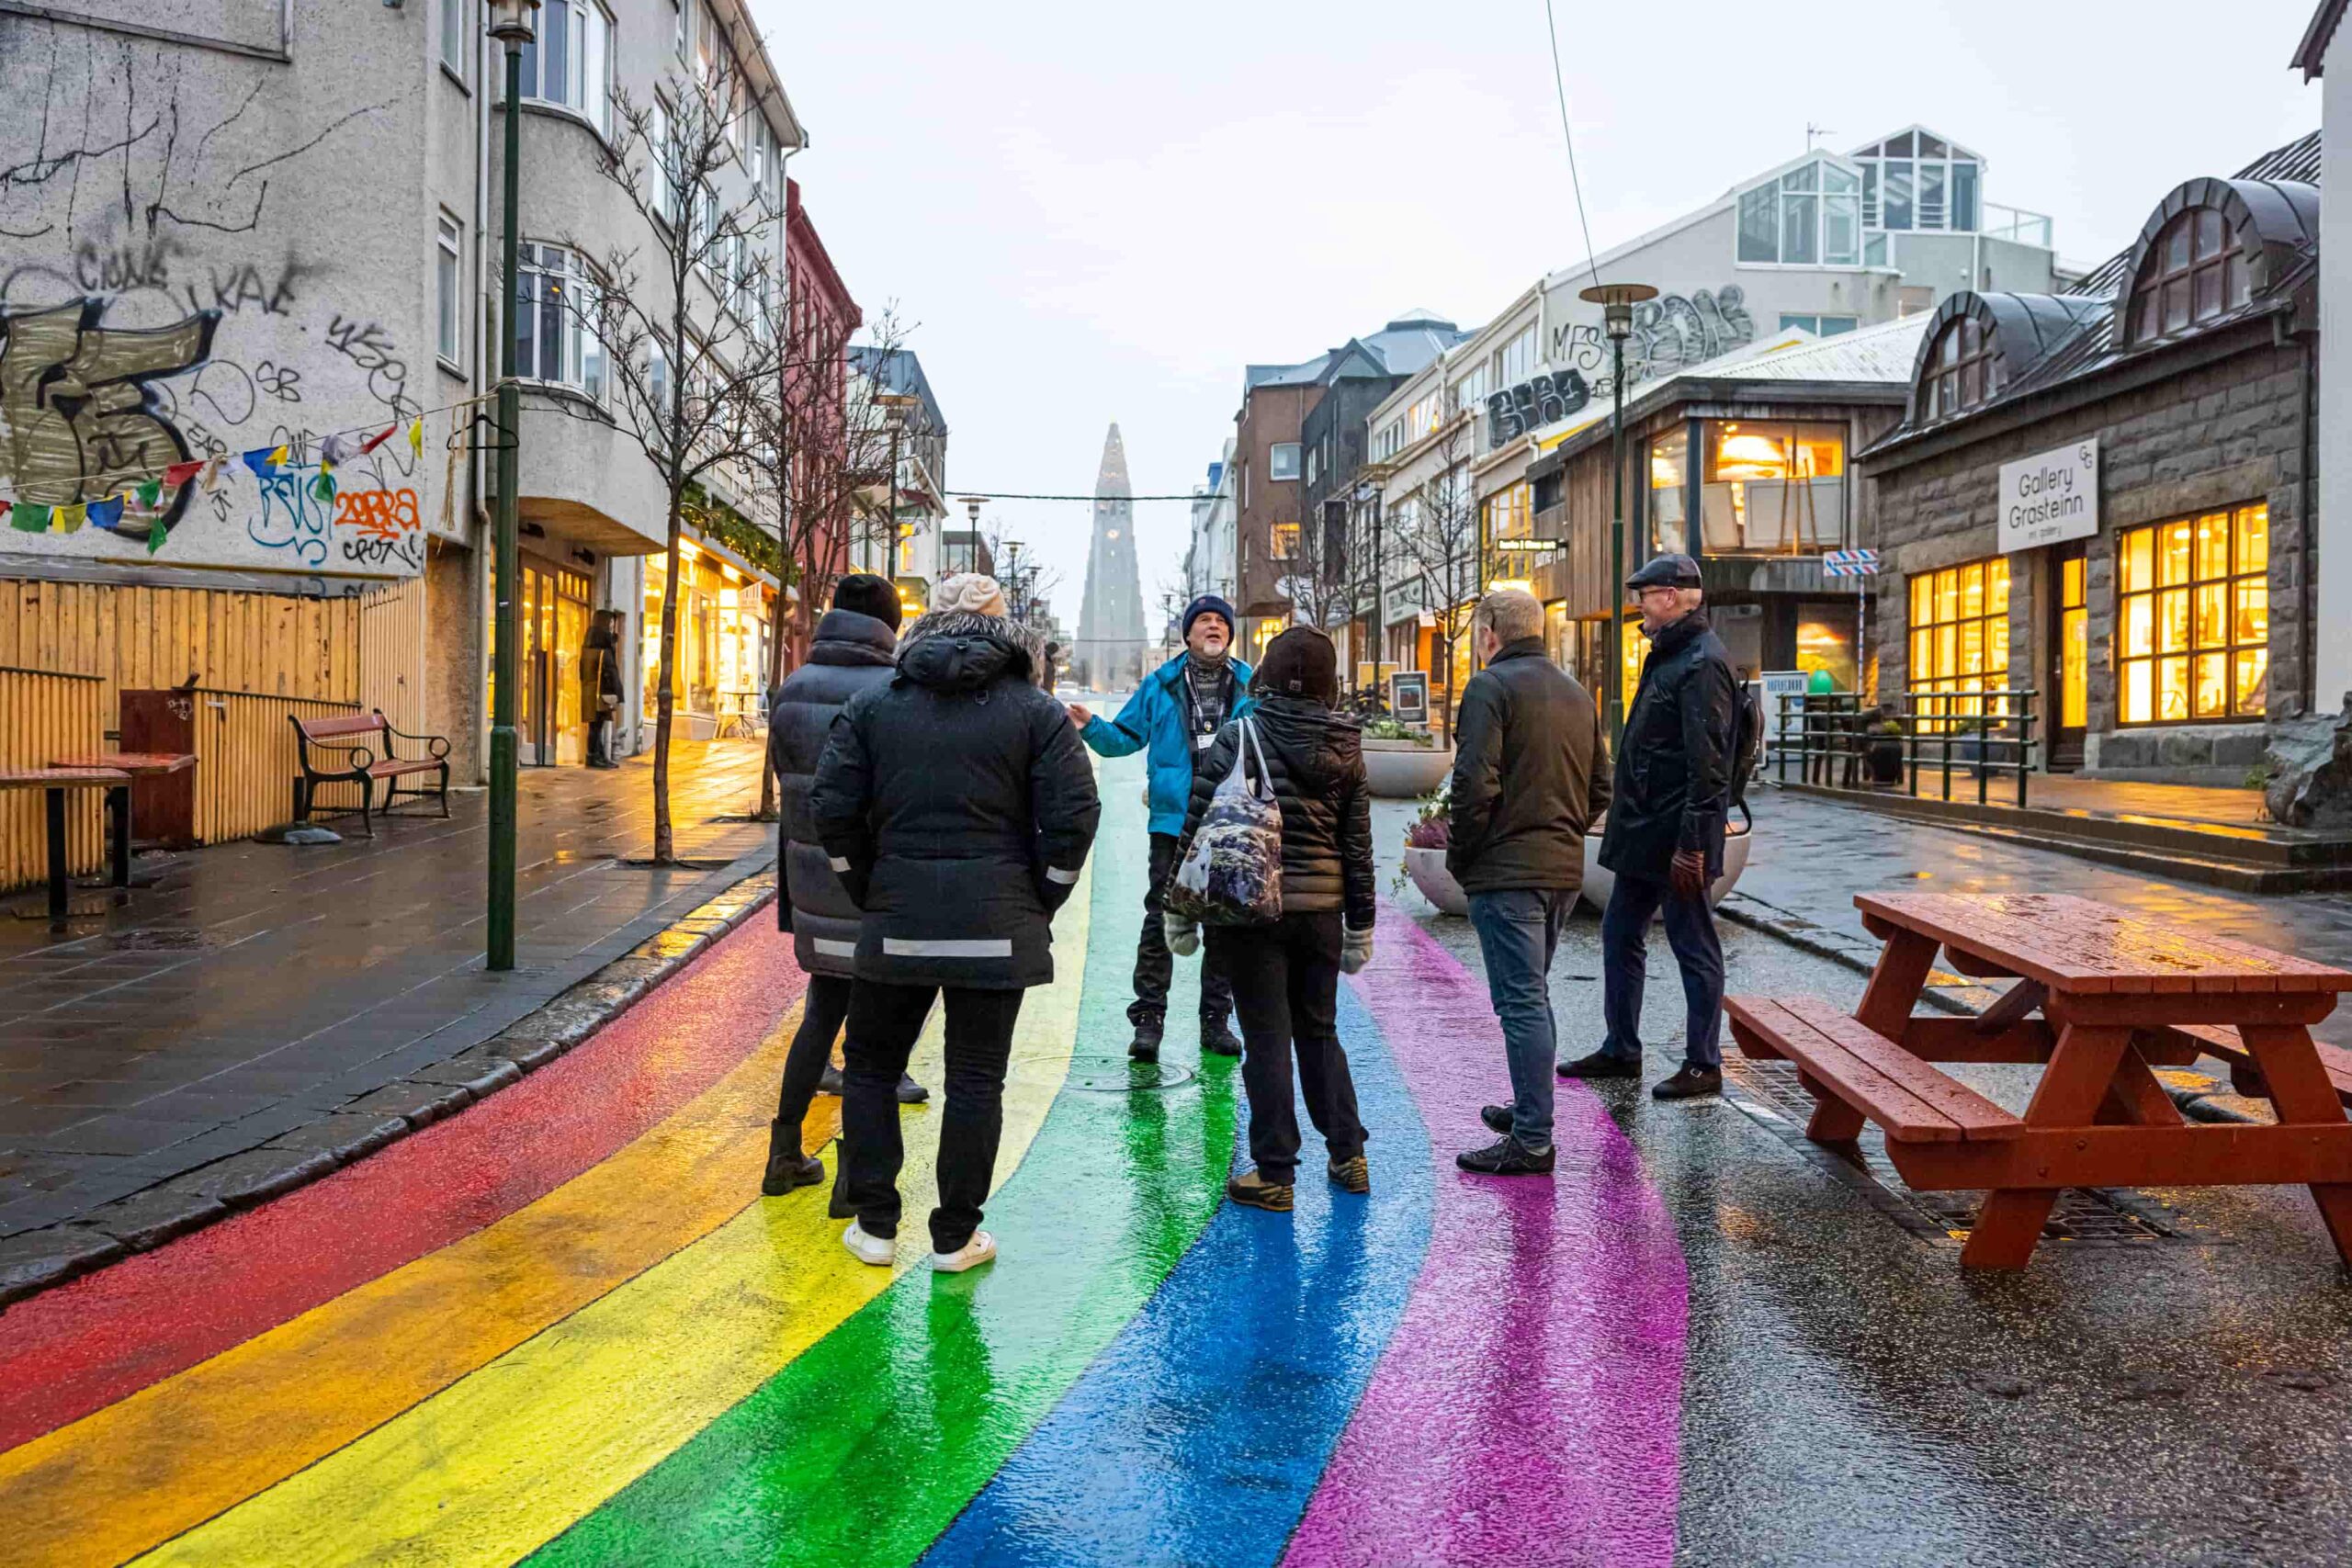 A group enjoying the Reykjavik Walking Tour by the Rainbow street